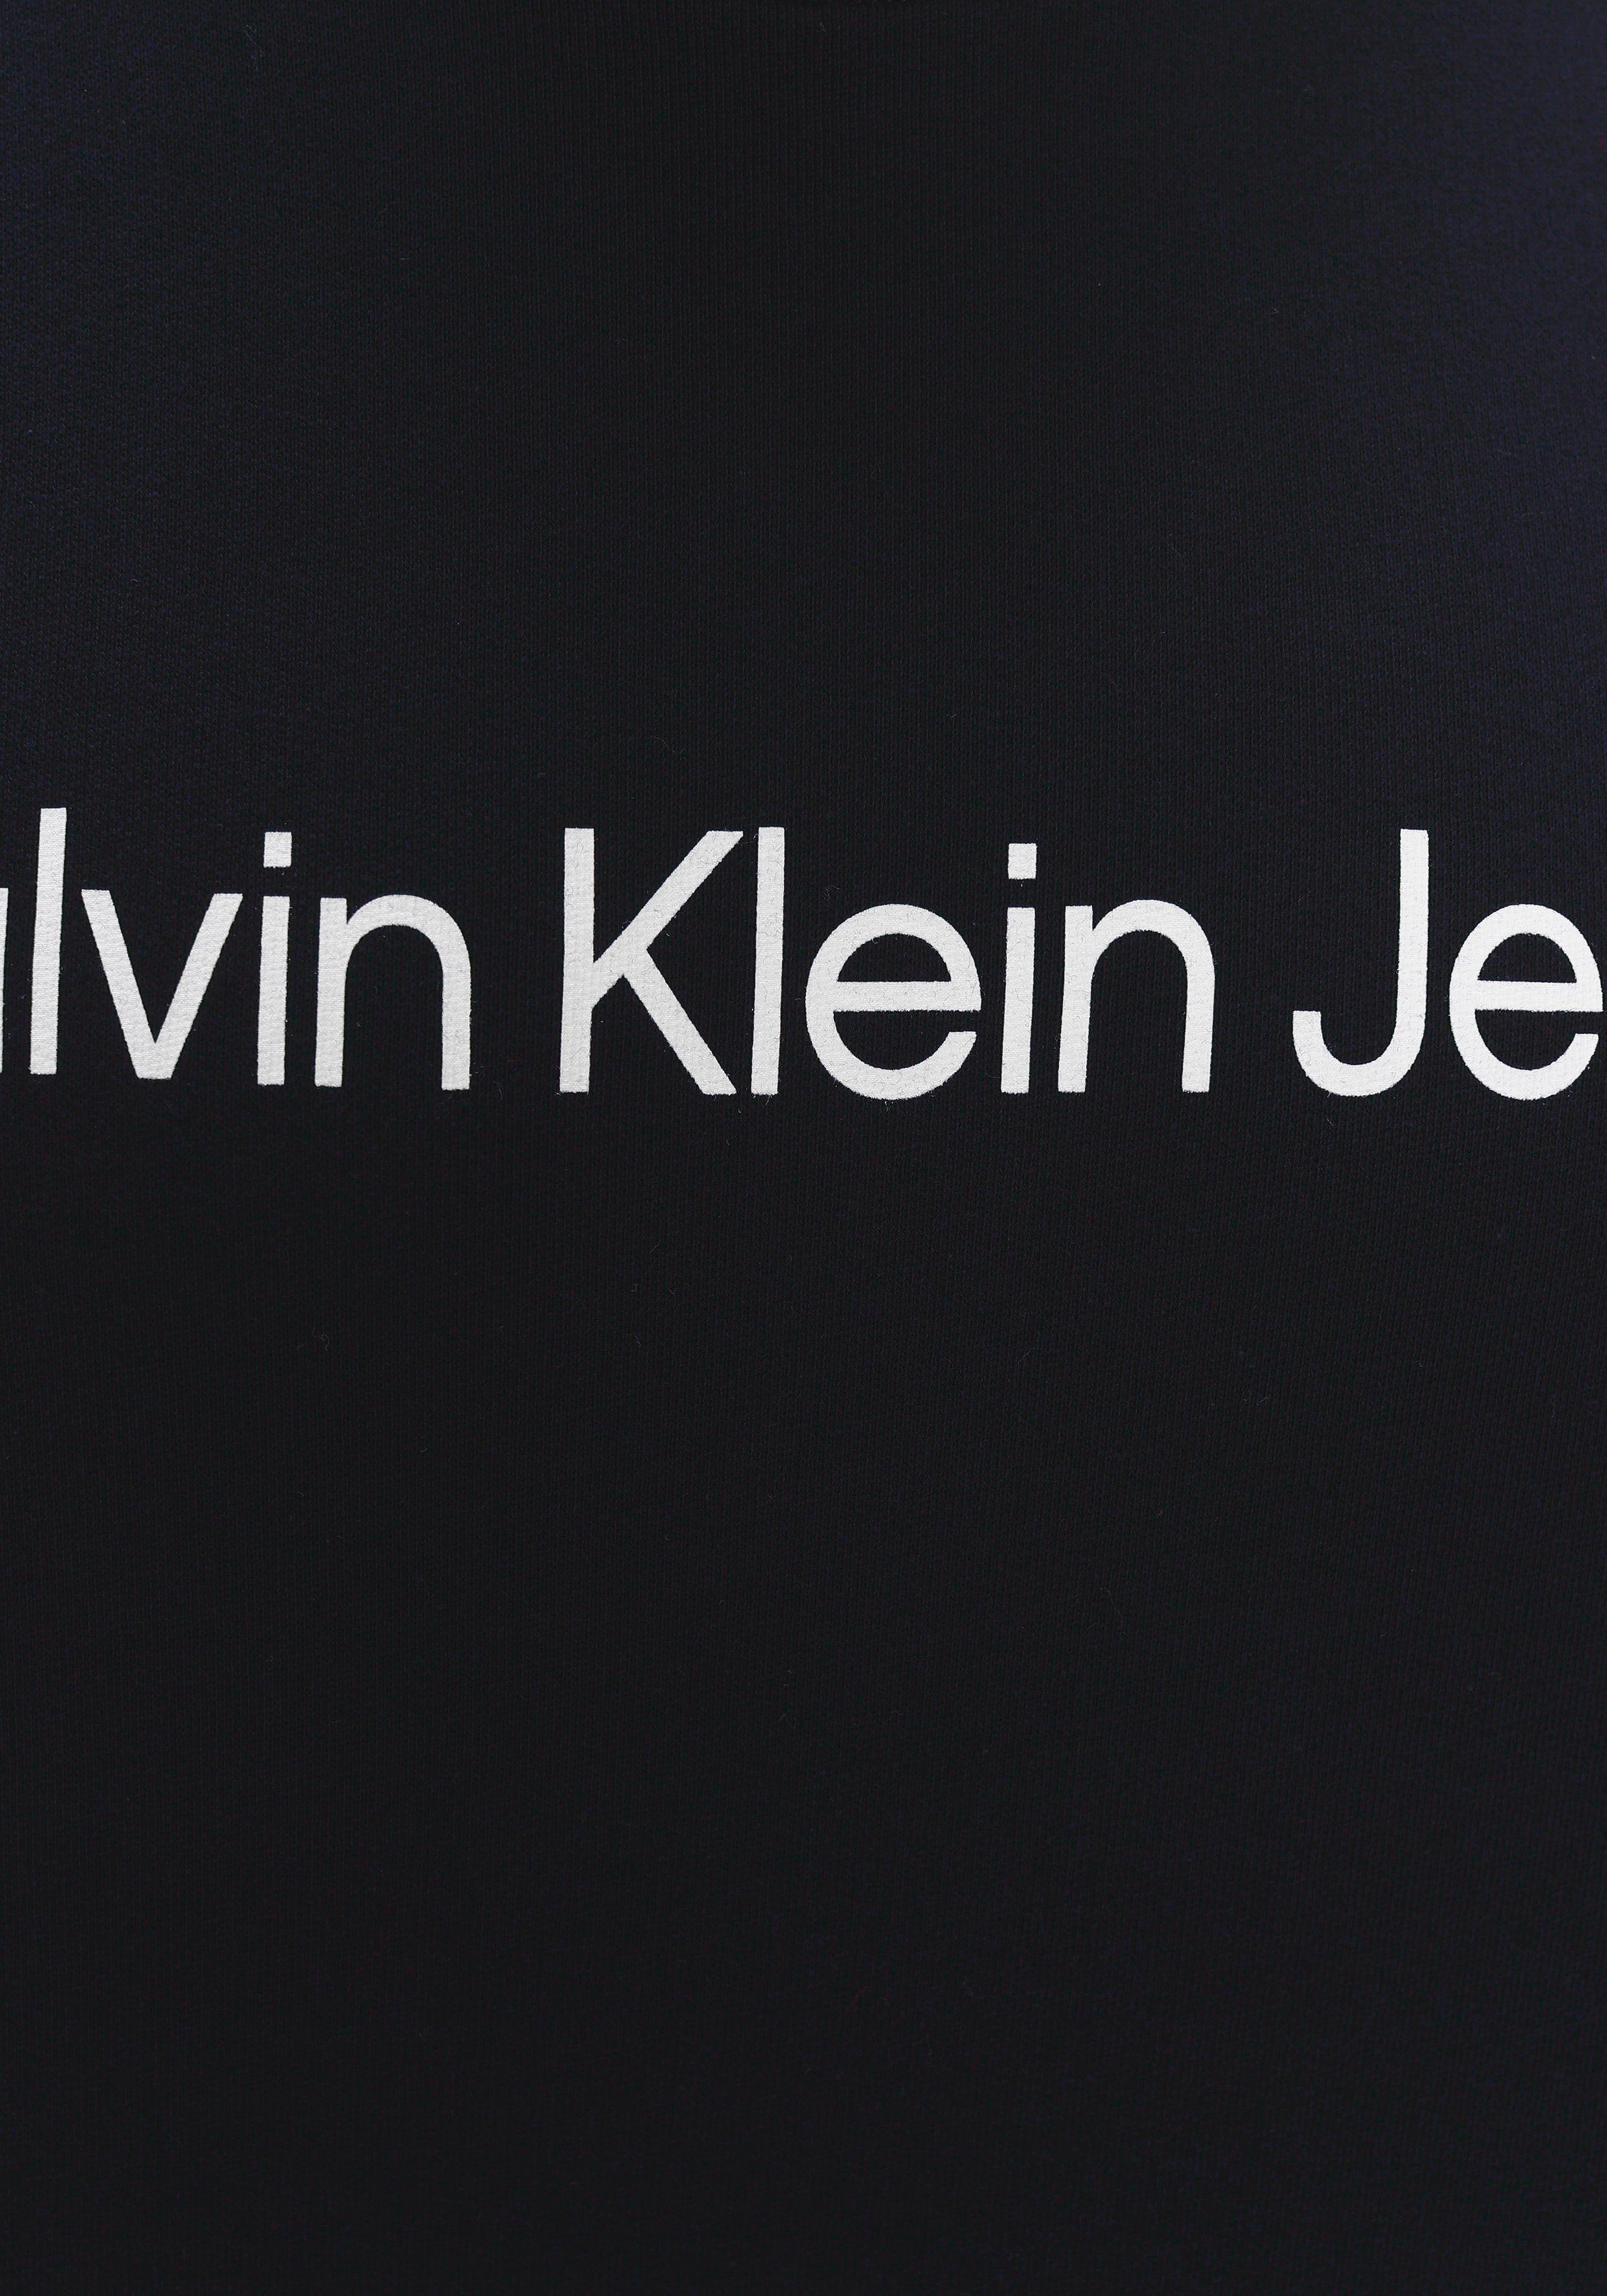 Jeans Calvin CORE Klein INSTIT LOGO SWEATSHIRT Sweatshirt